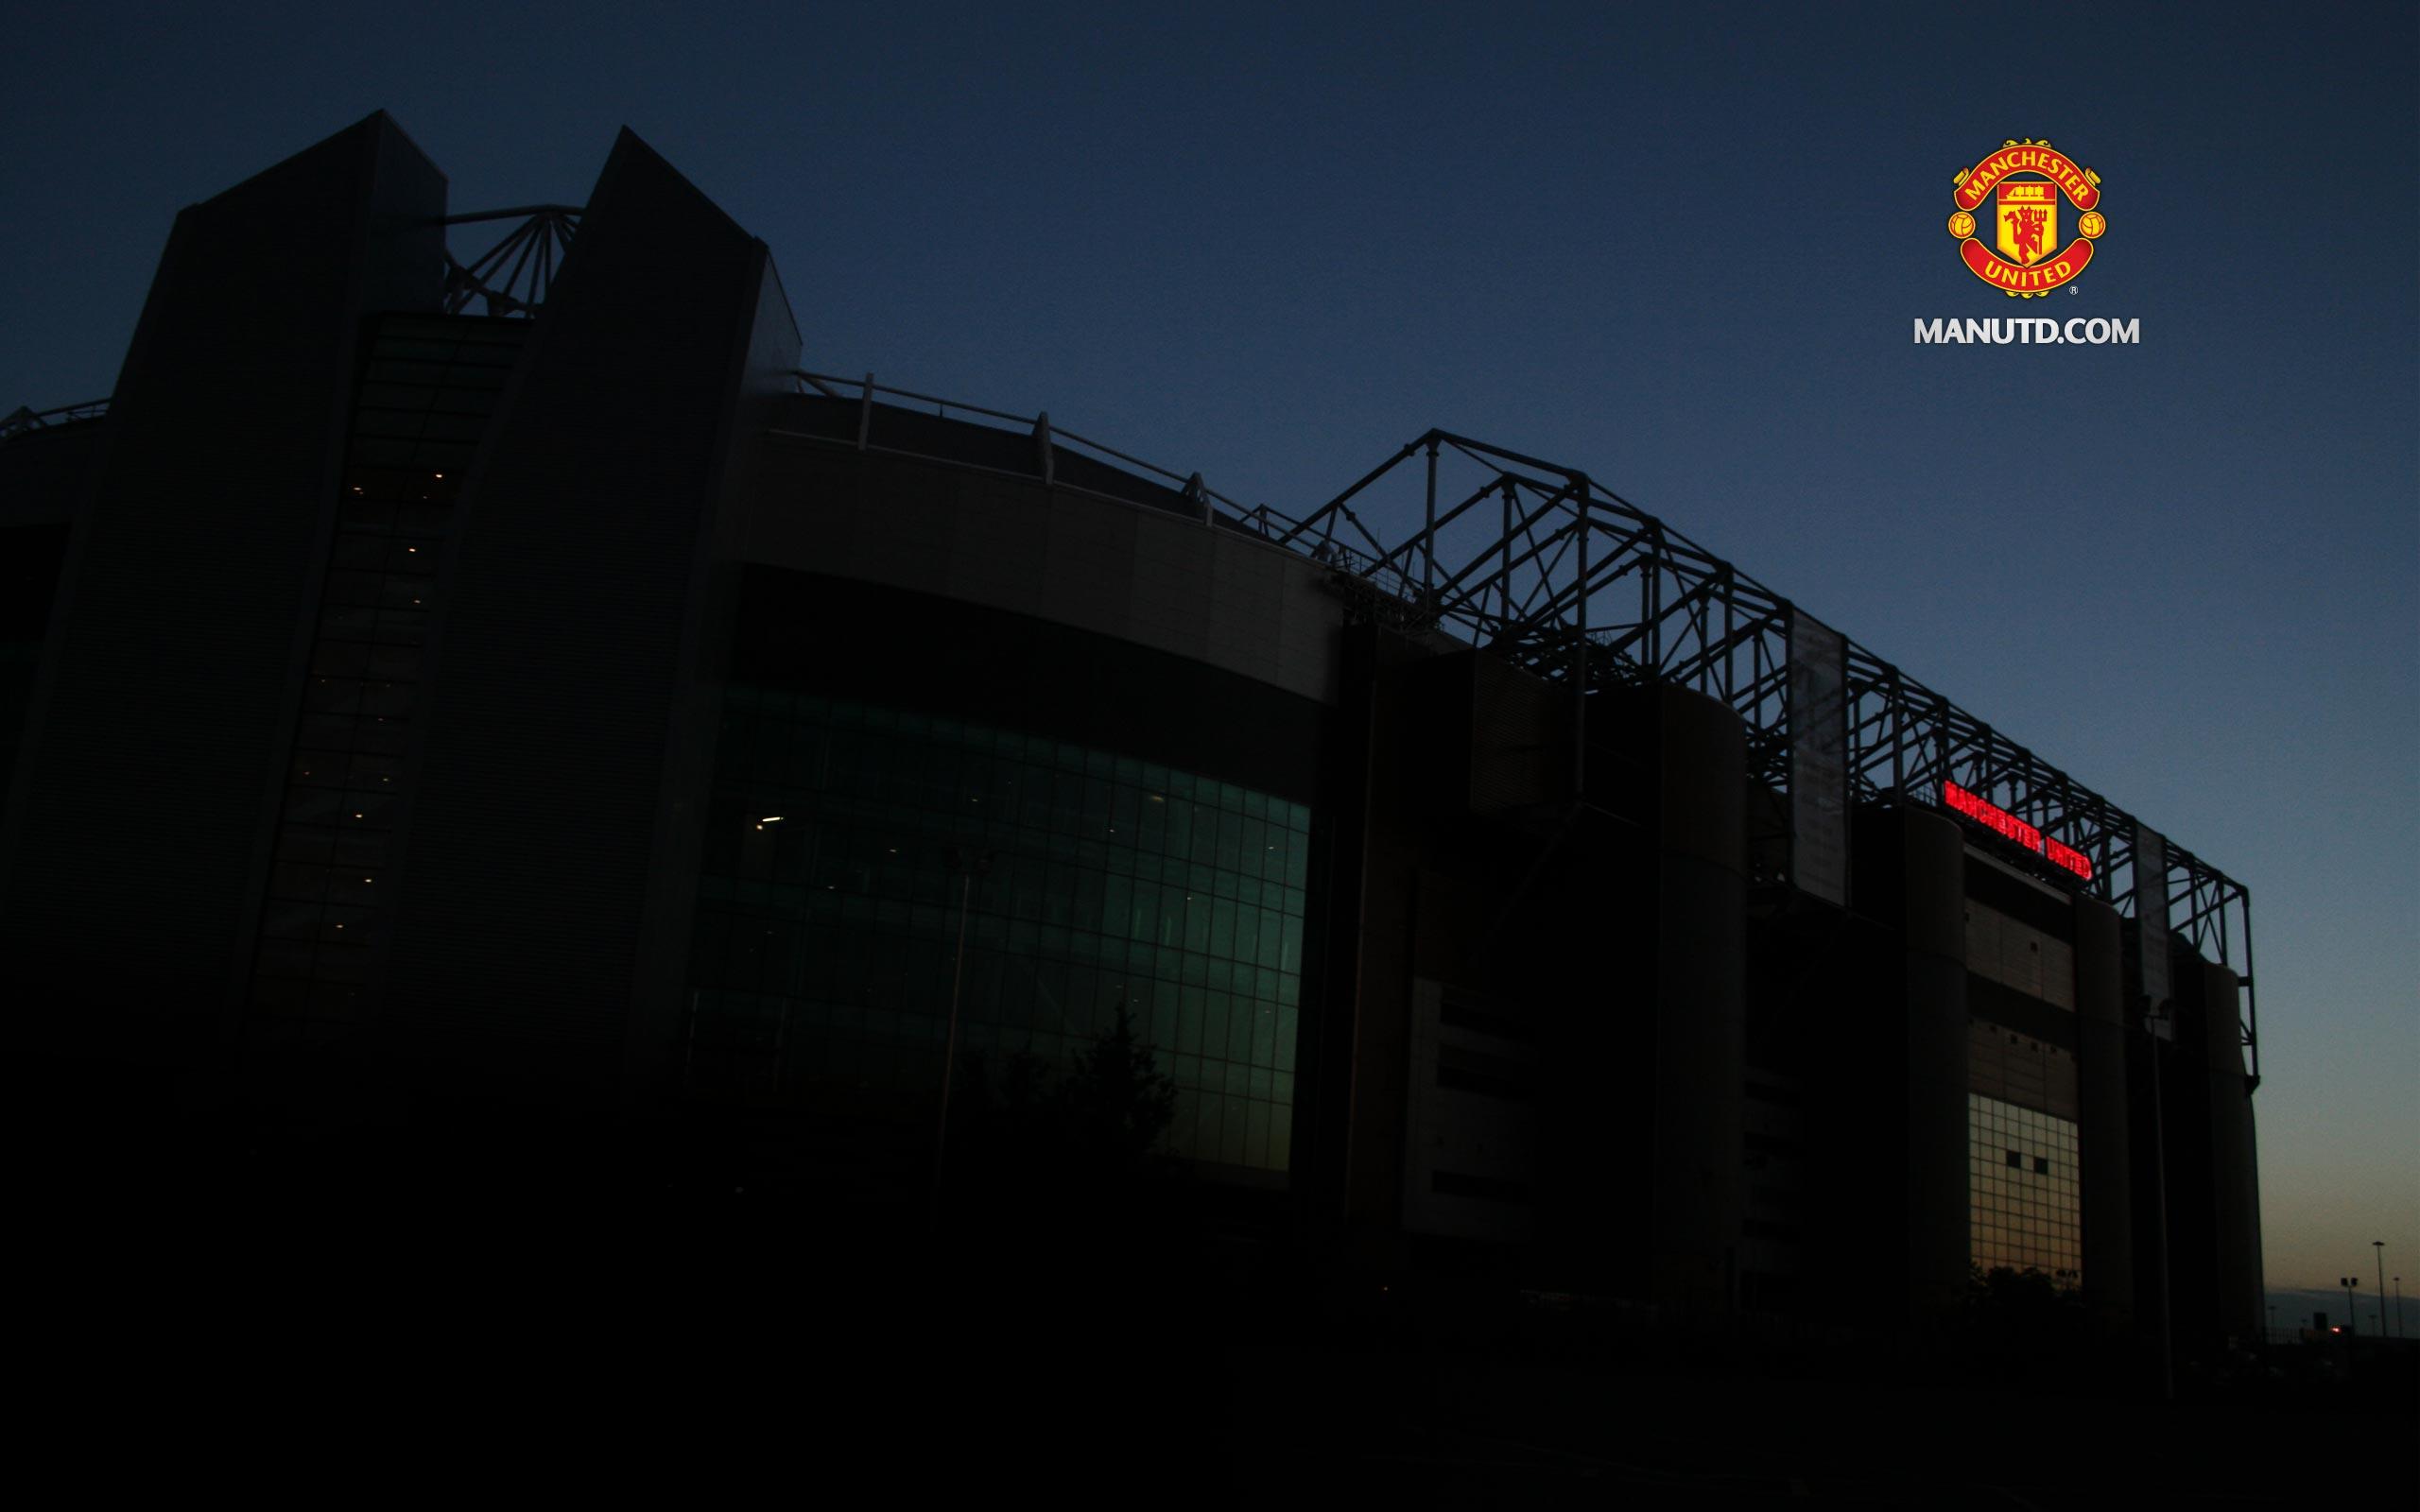 Old Trafford at night. Teams. Trafford and Man united